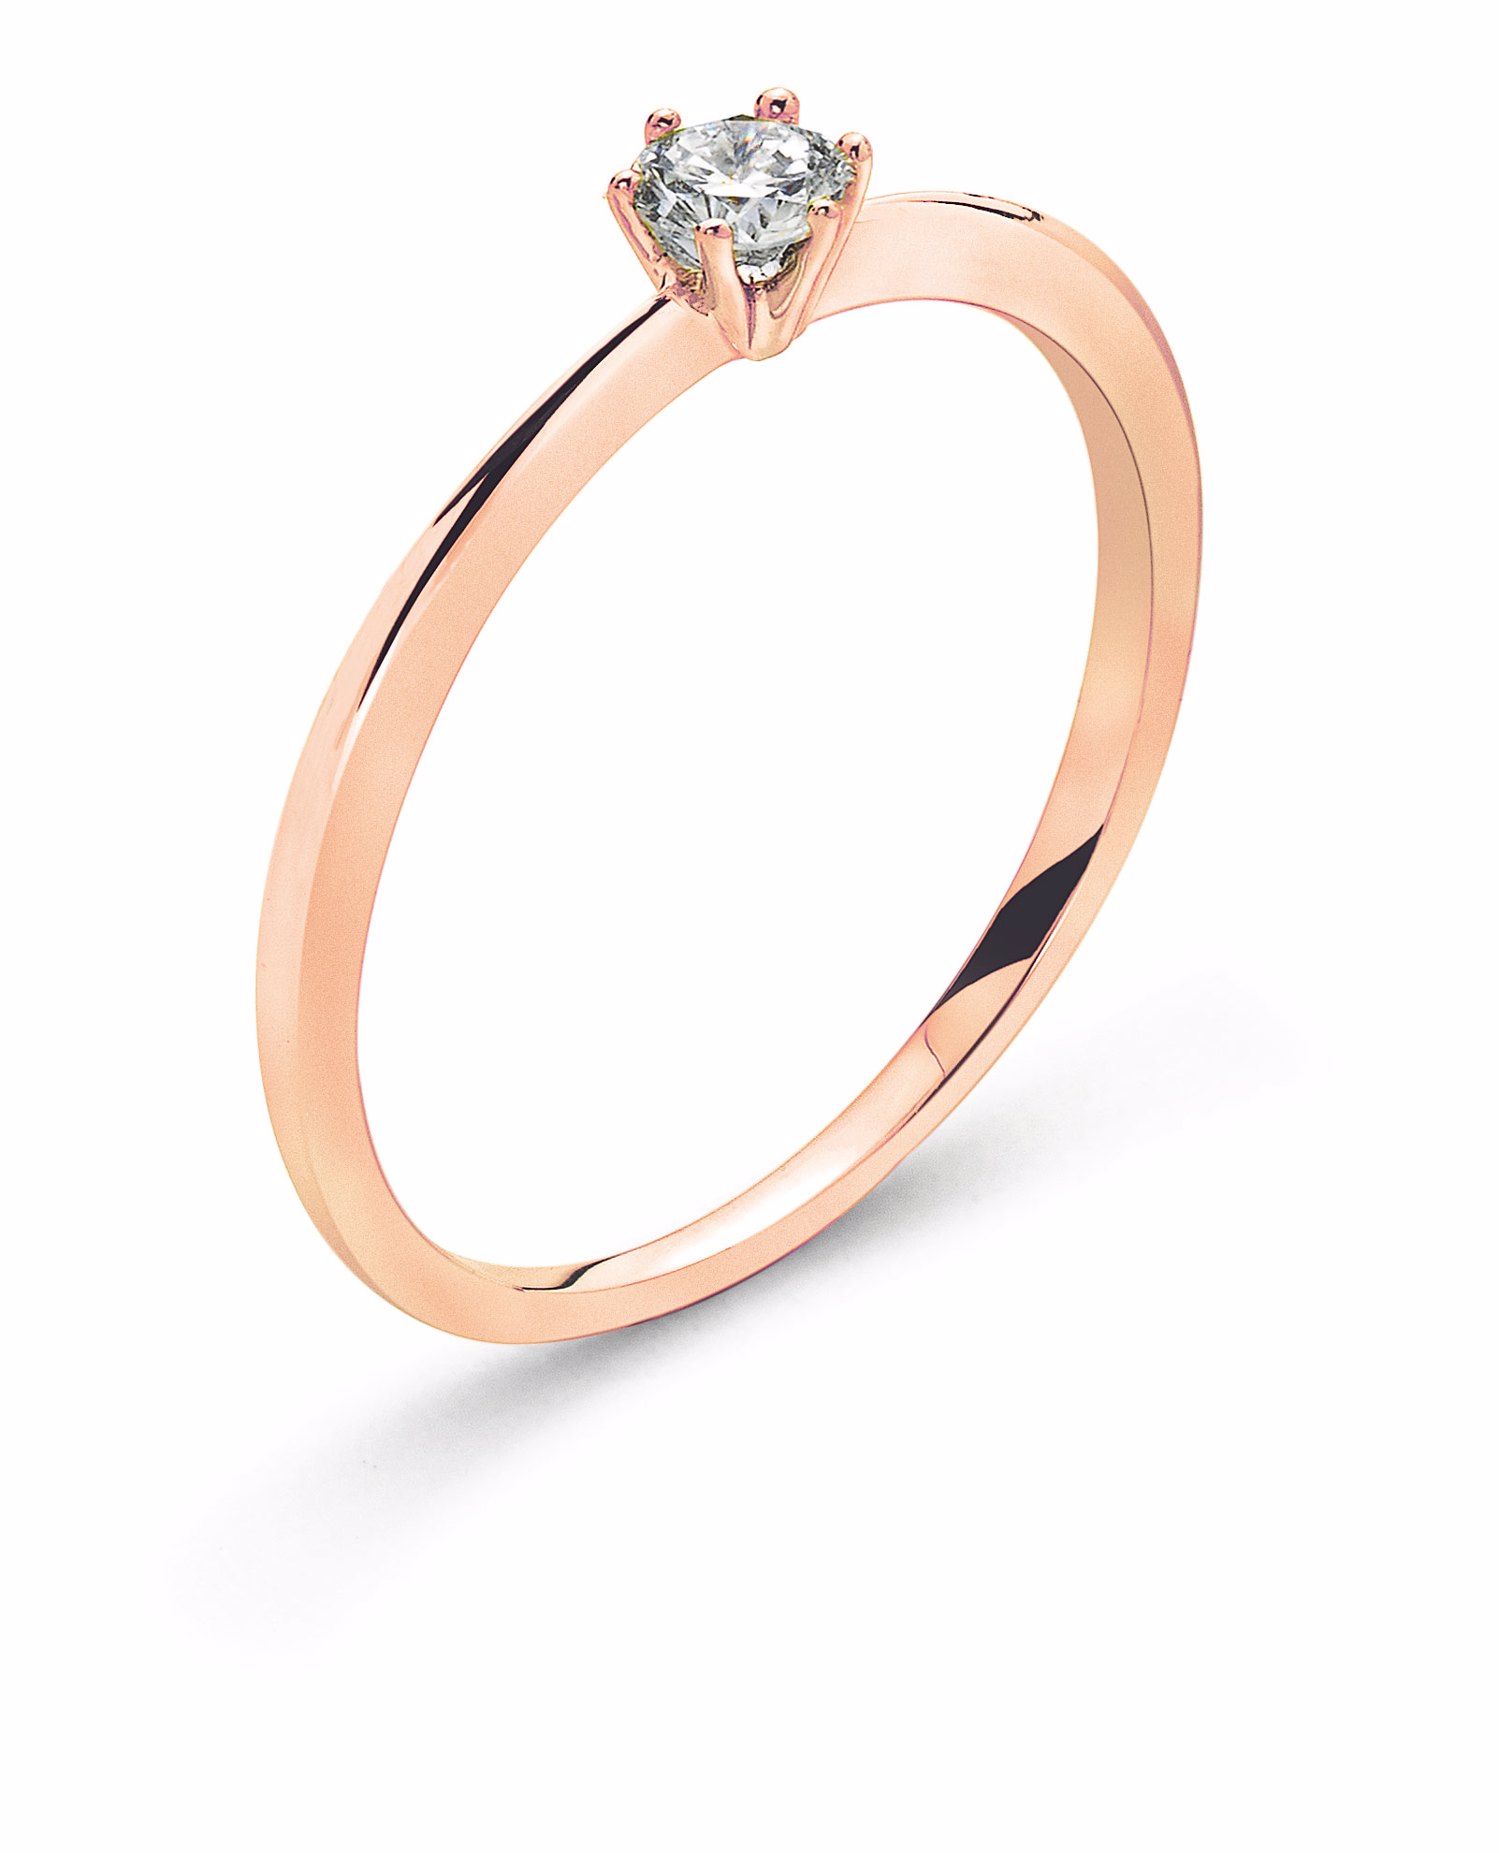 AURONOS Prestige Solitaire Ring Rose Gold 18K Diamond 0.15ct